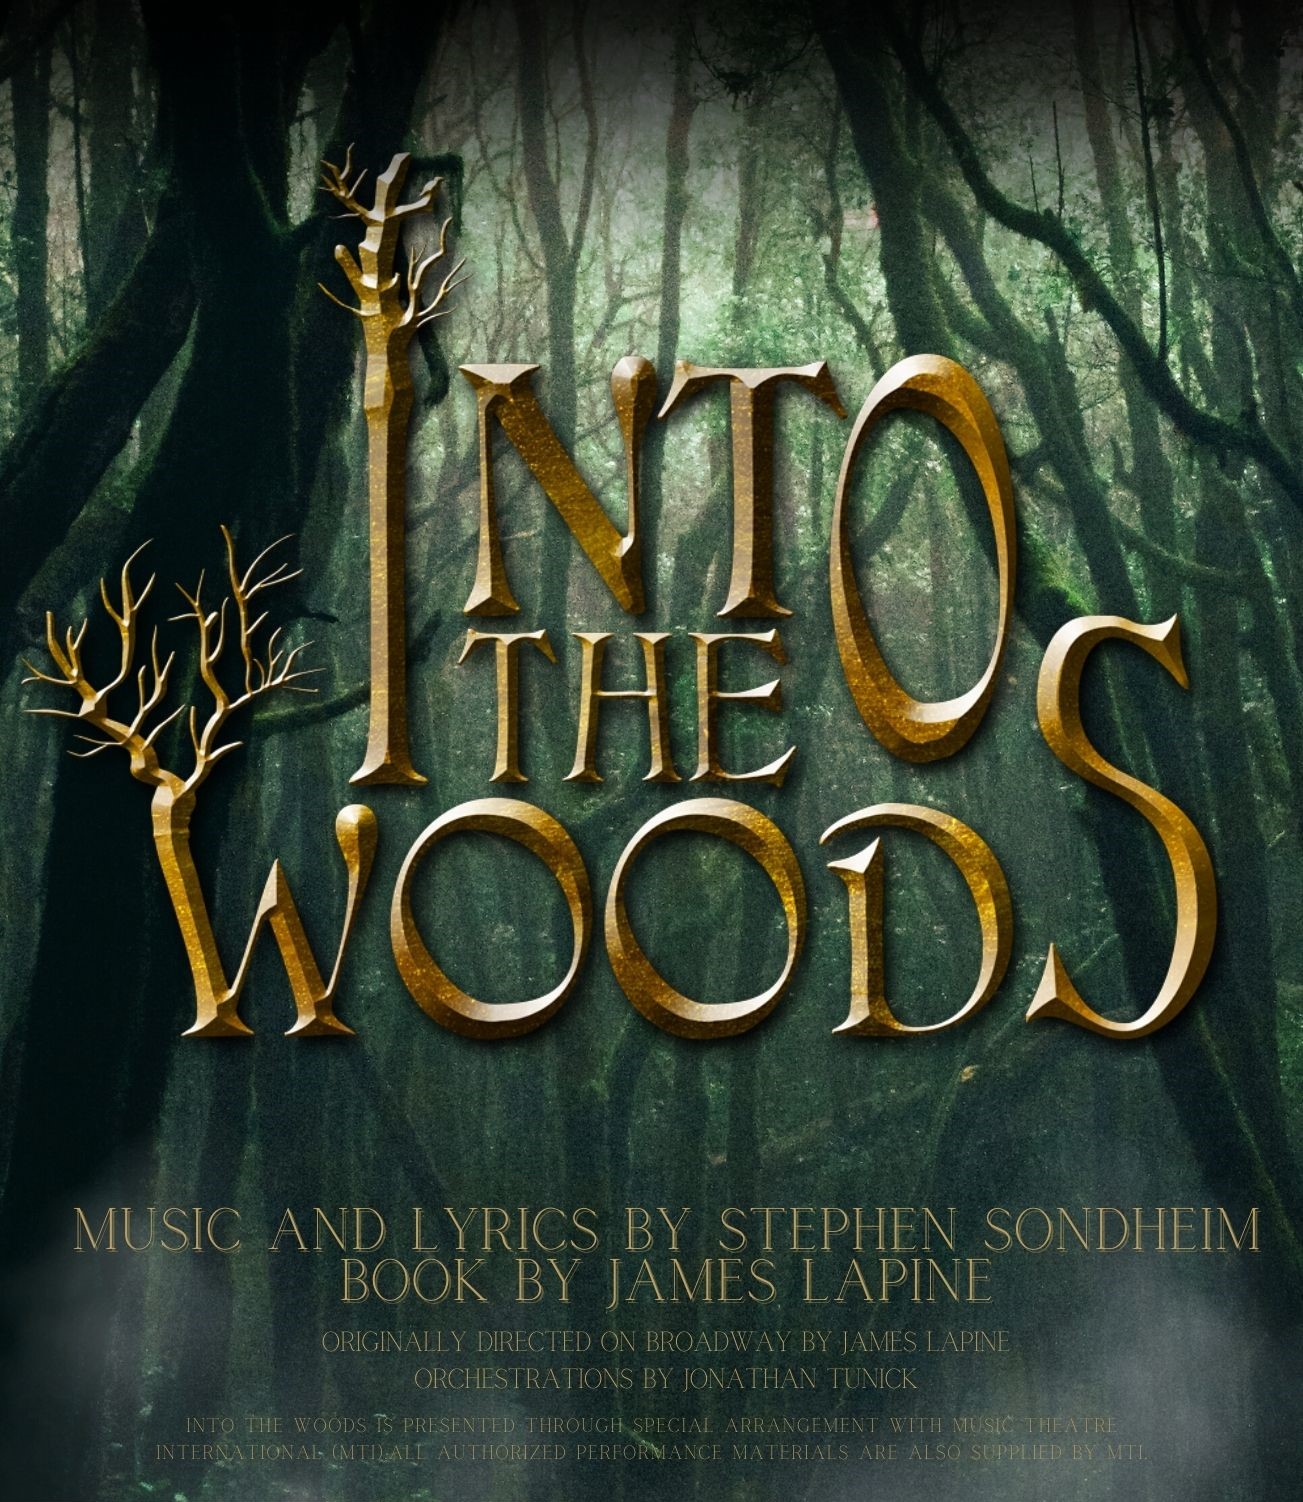 Triple Threat Threeactrics Presents “Into The Woods”